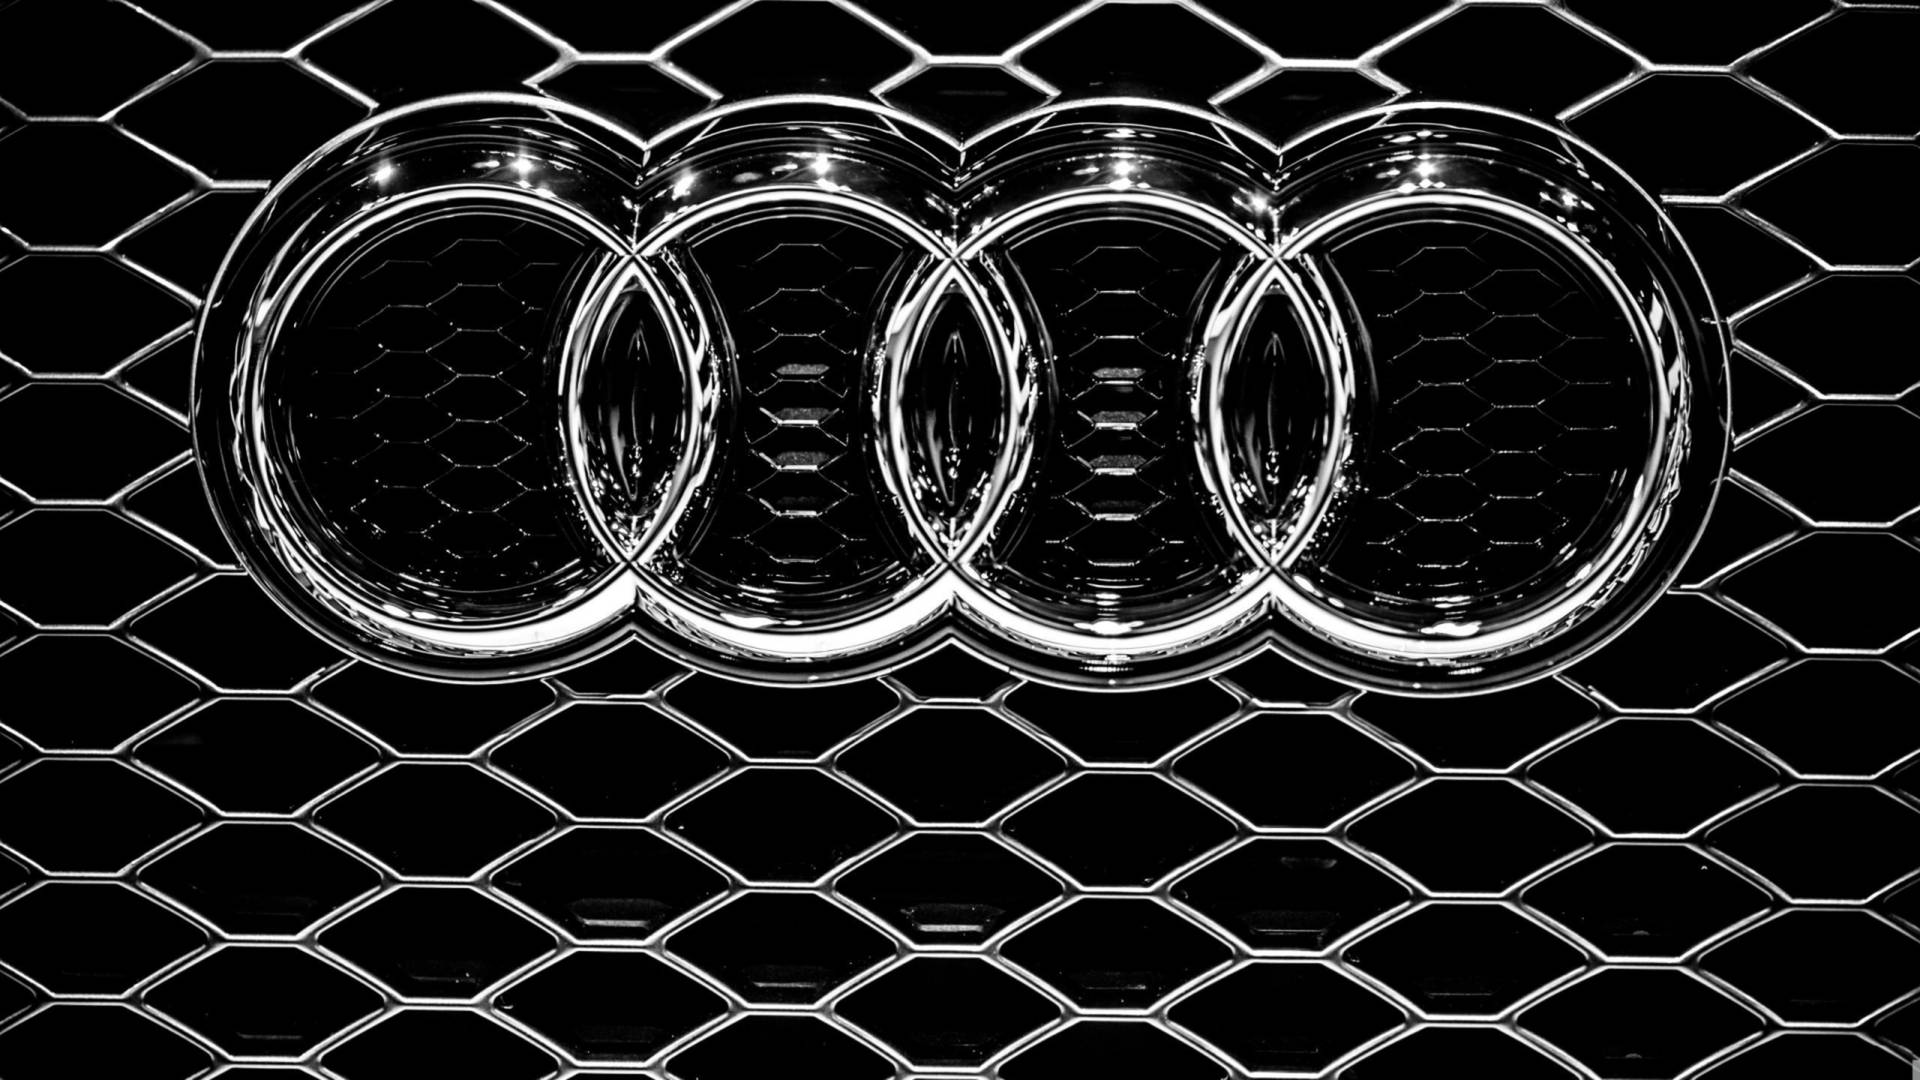 Silver Audi Car Emblem In Solid Black Picture